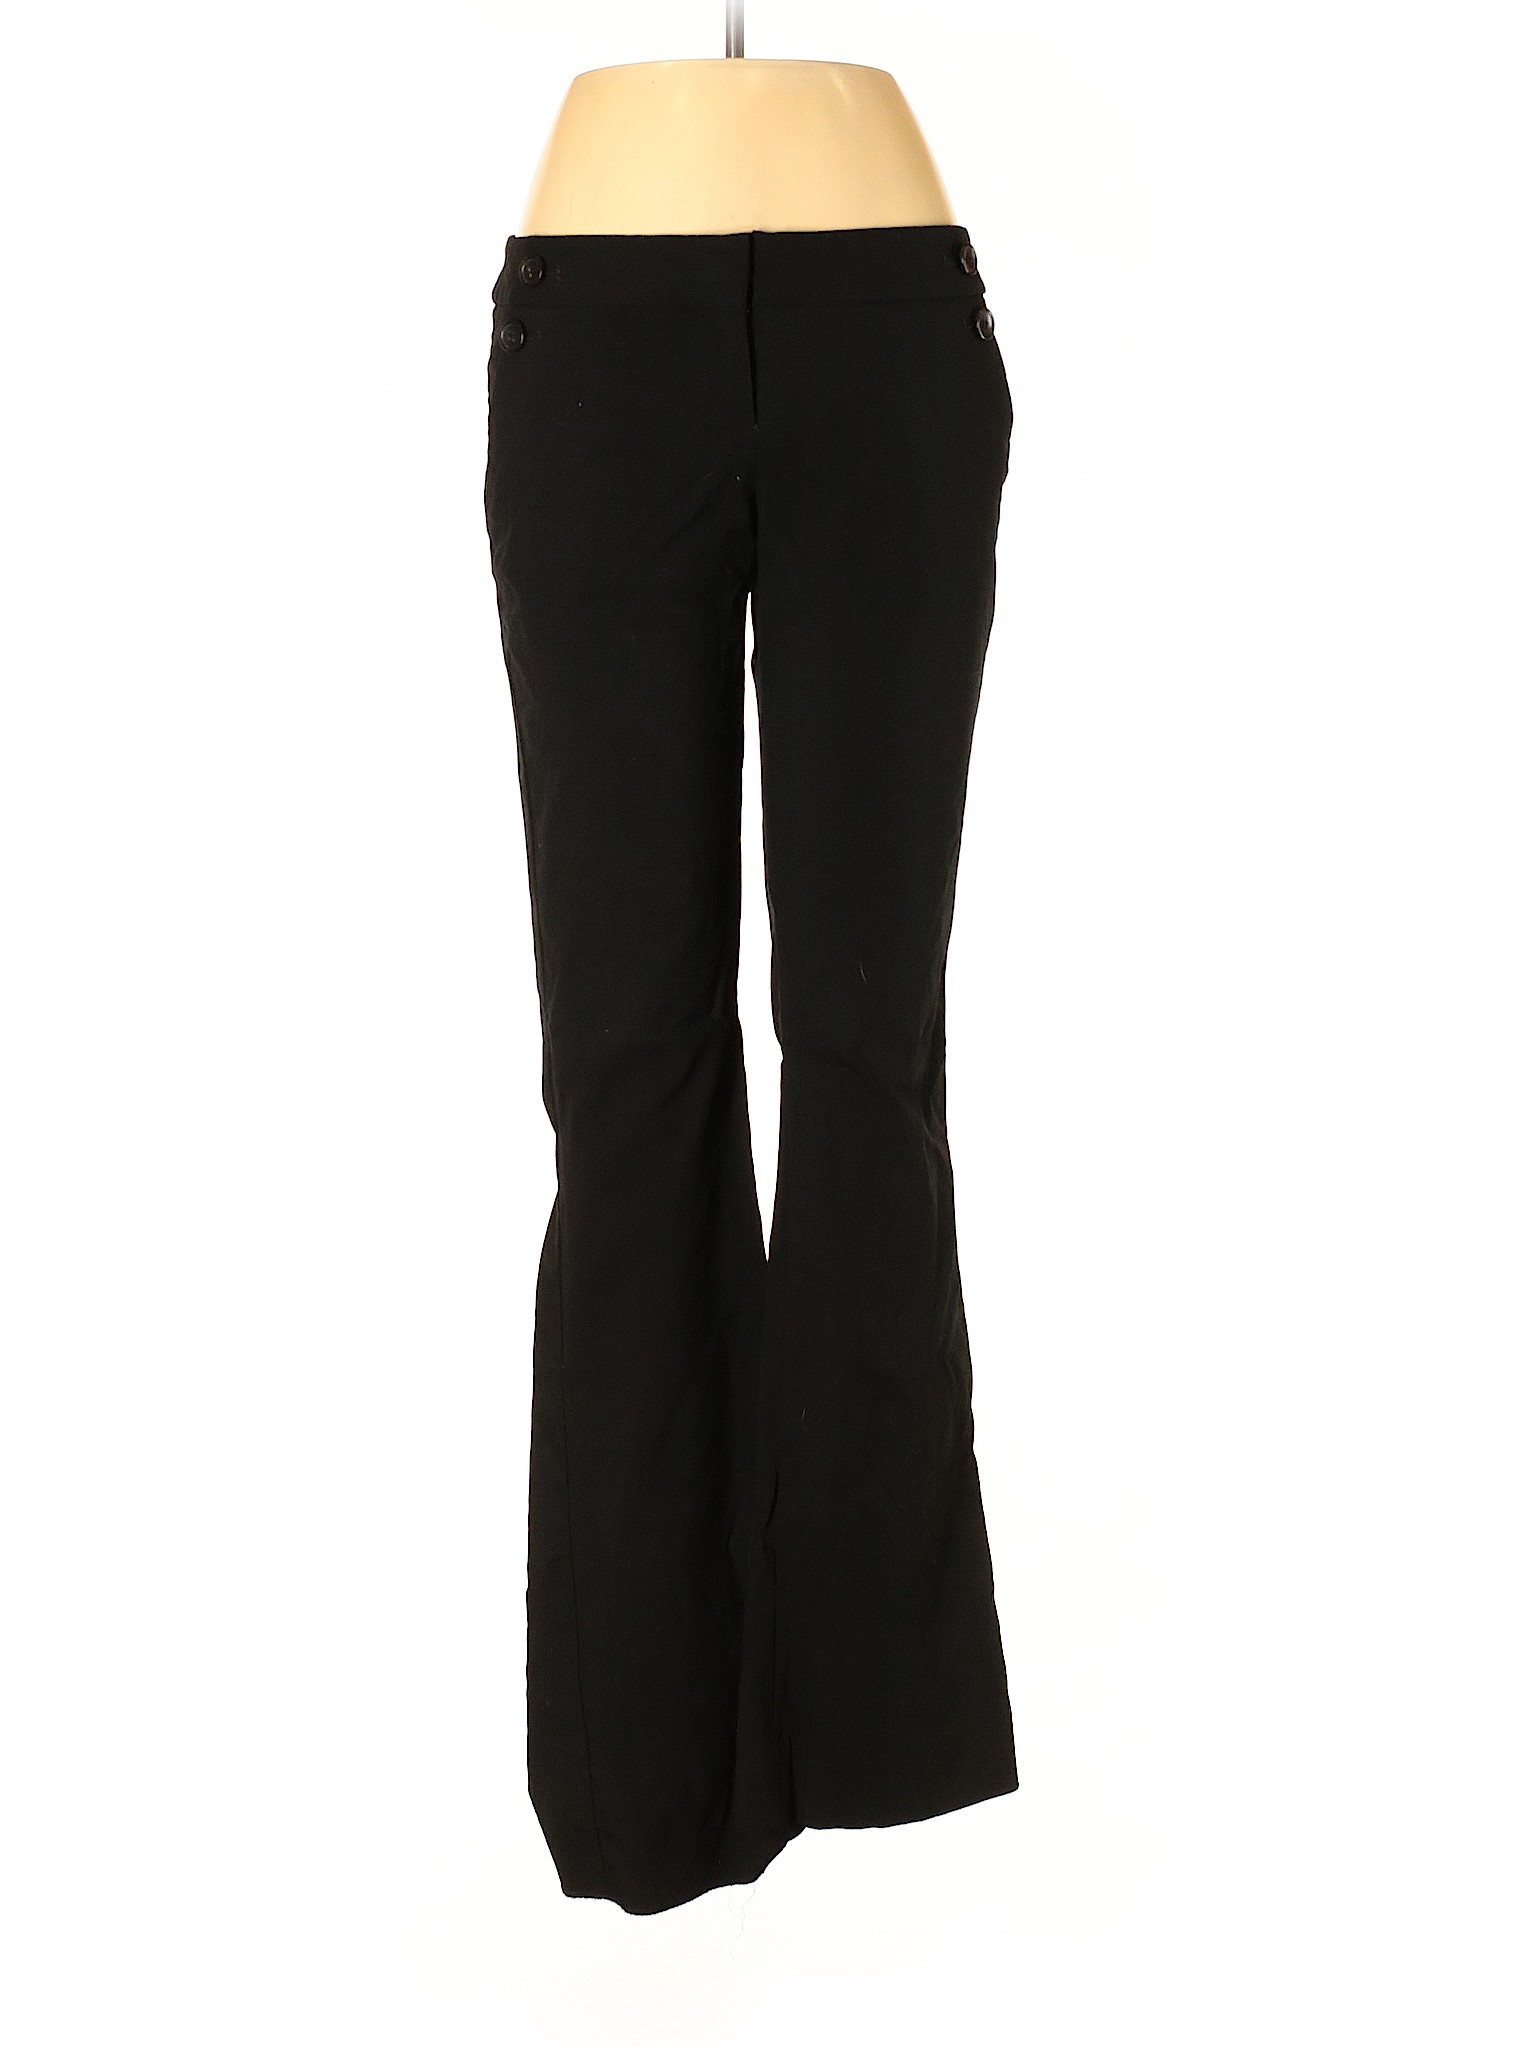 The Limited Women Black Dress Pants 6 | eBay